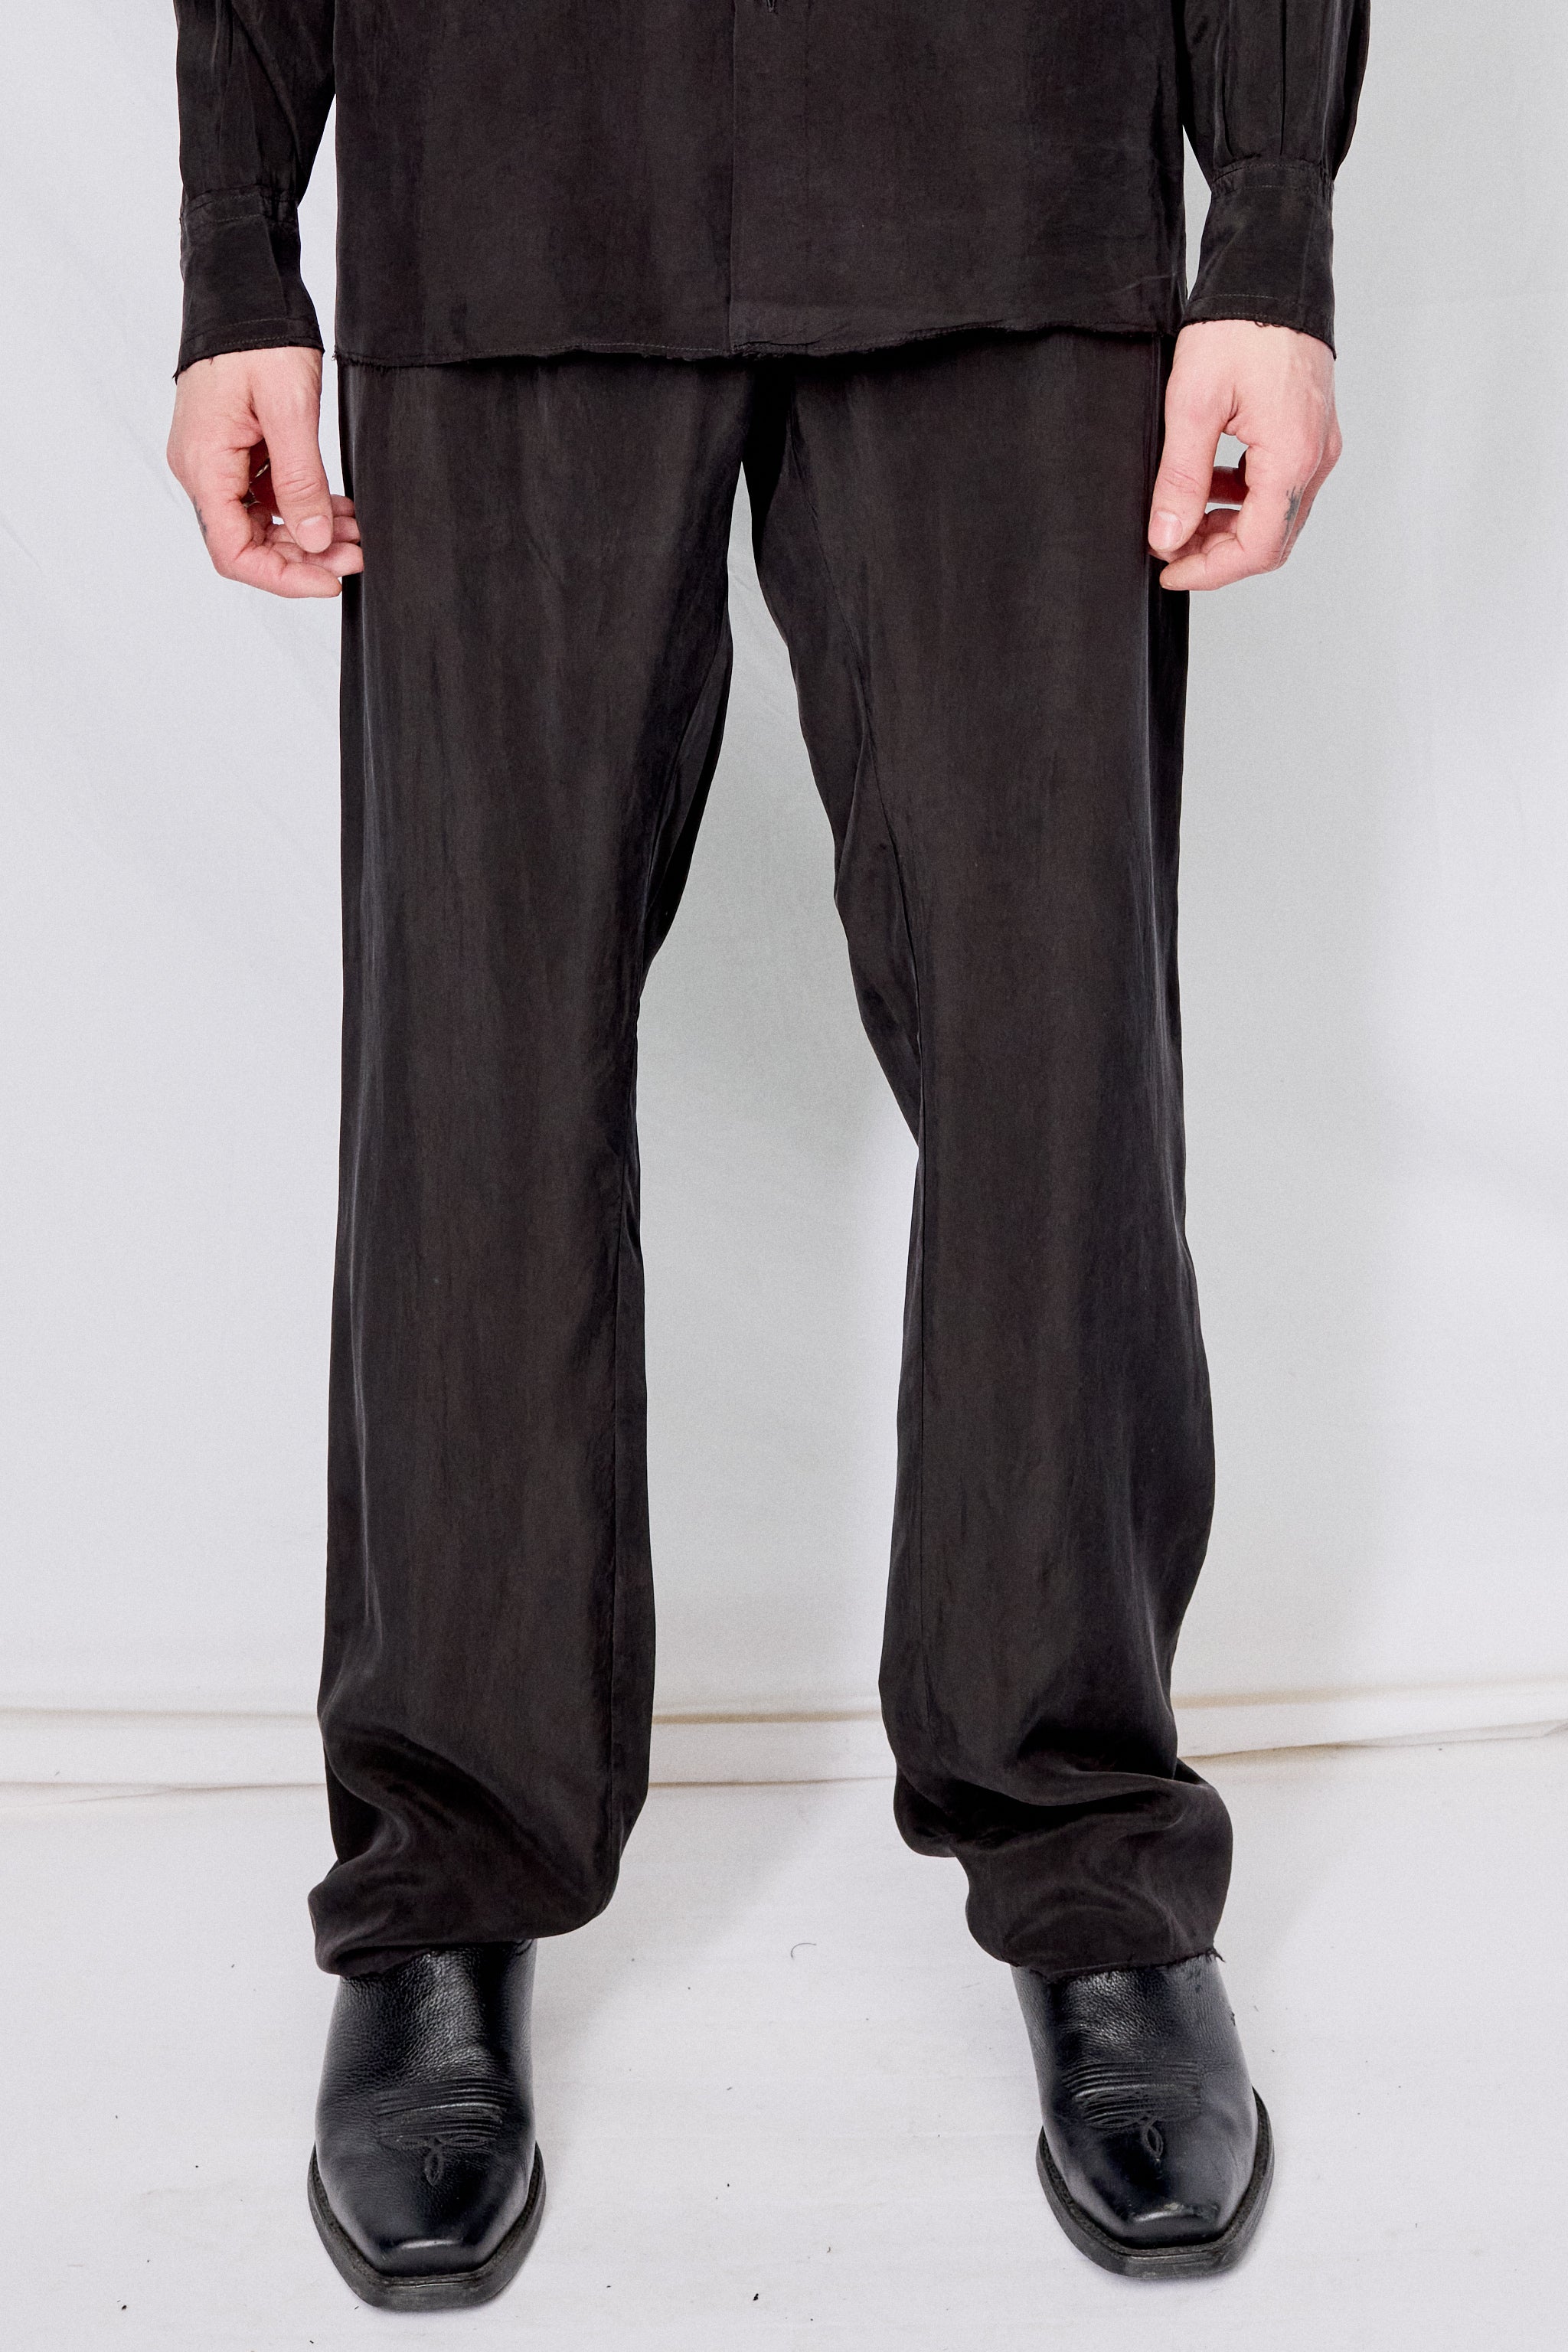 No.260 Black Cupro Long Trousers